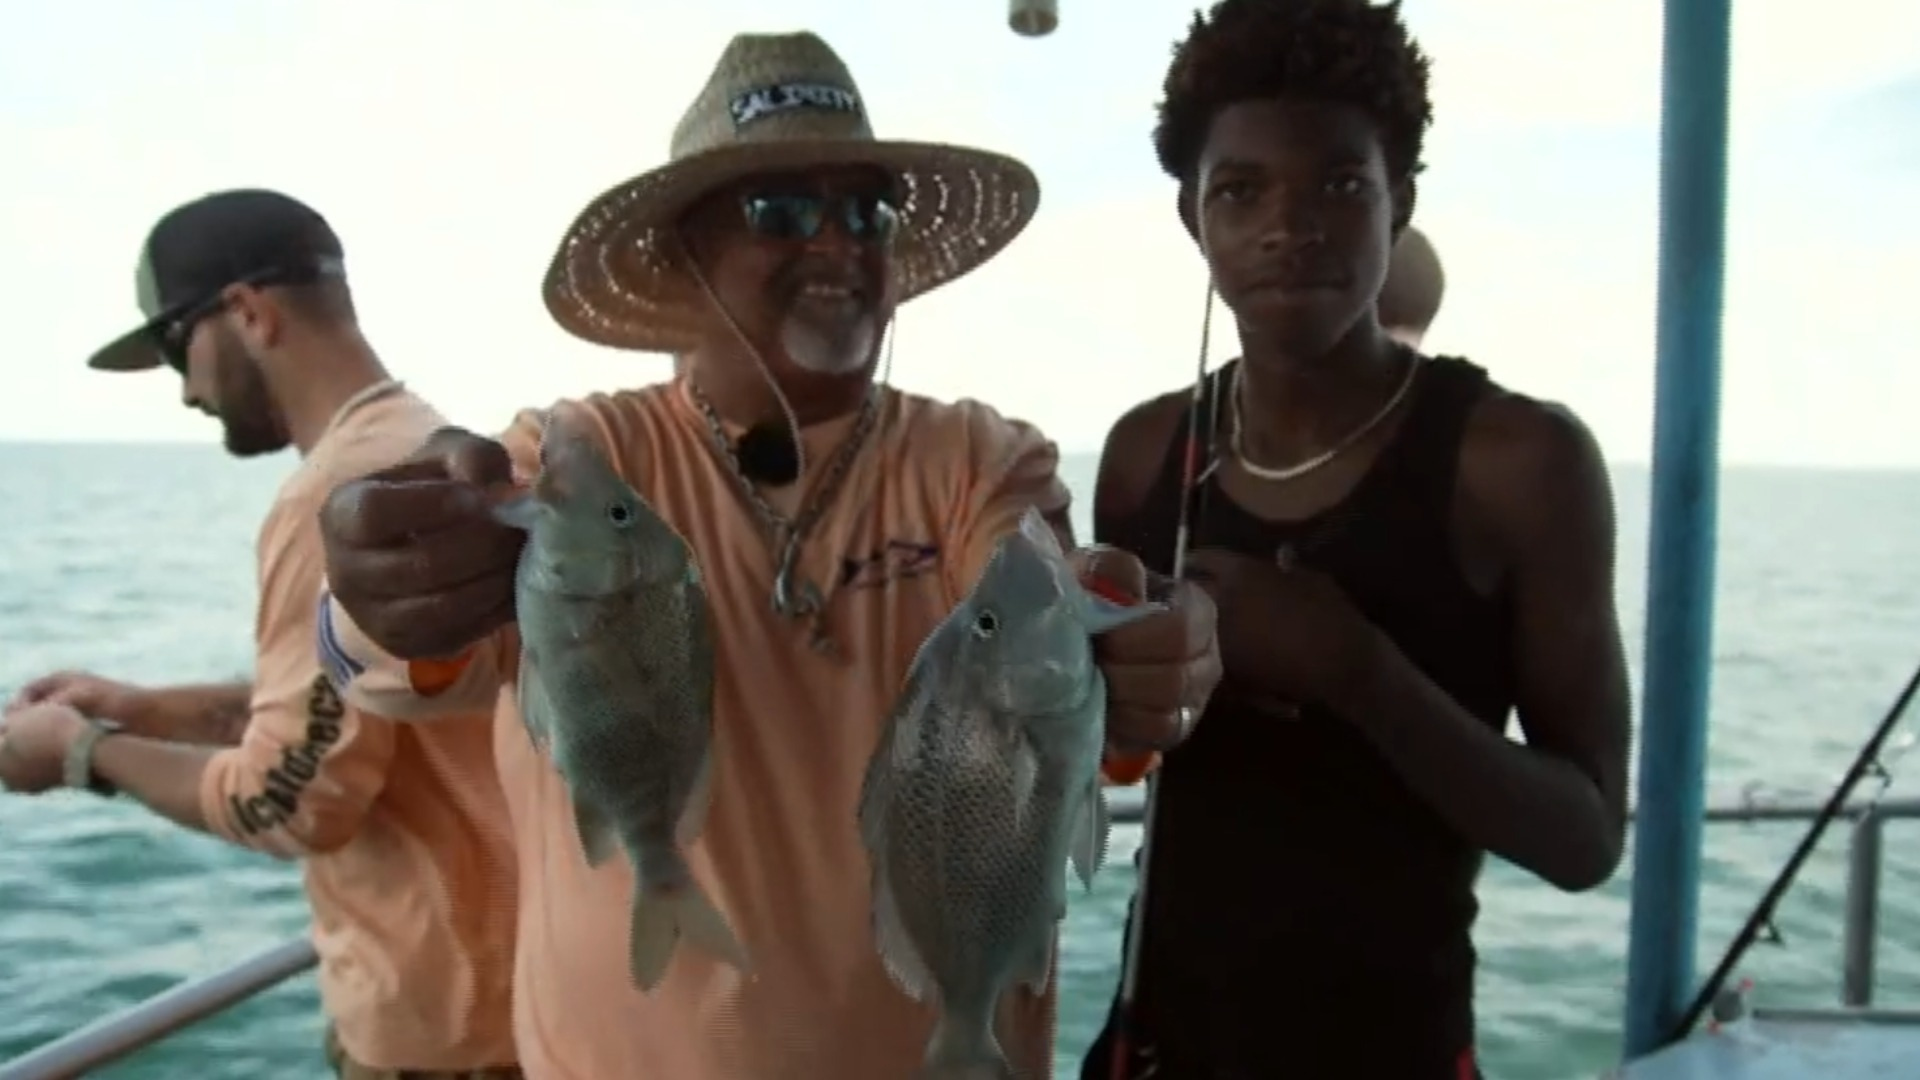 Watch CBS Evening News: One man's journey taking kids fishing - Full show  on CBS